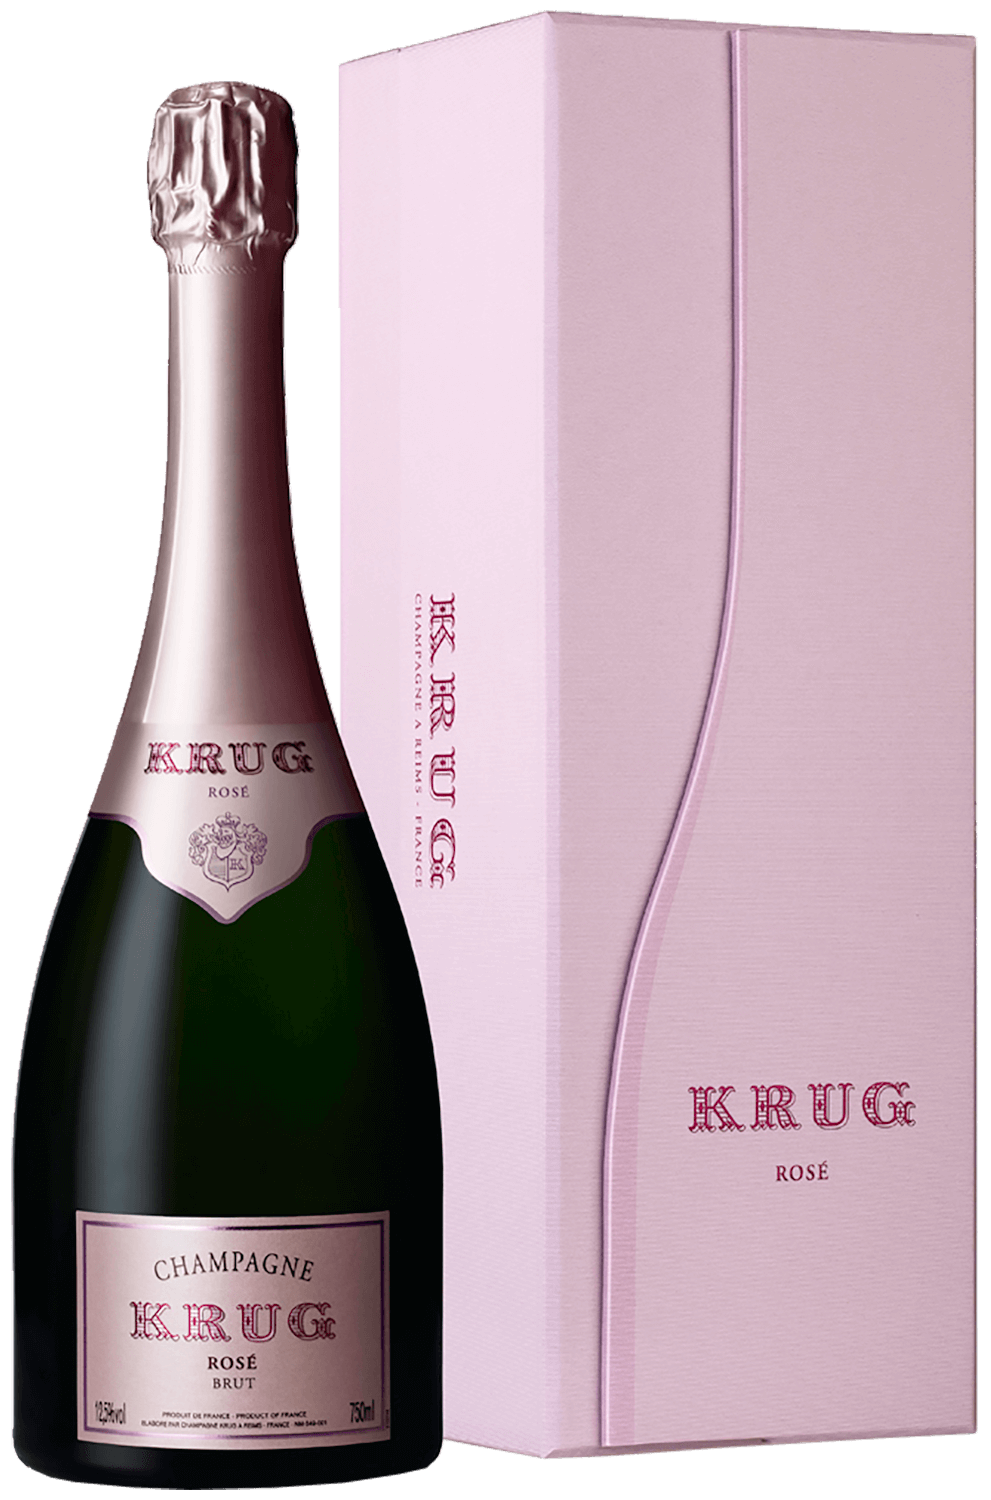 Krug Rose Brut Champagne AOC (in gift box) piper heidsieck sauvage rose brut champagne aoc gift box bbq